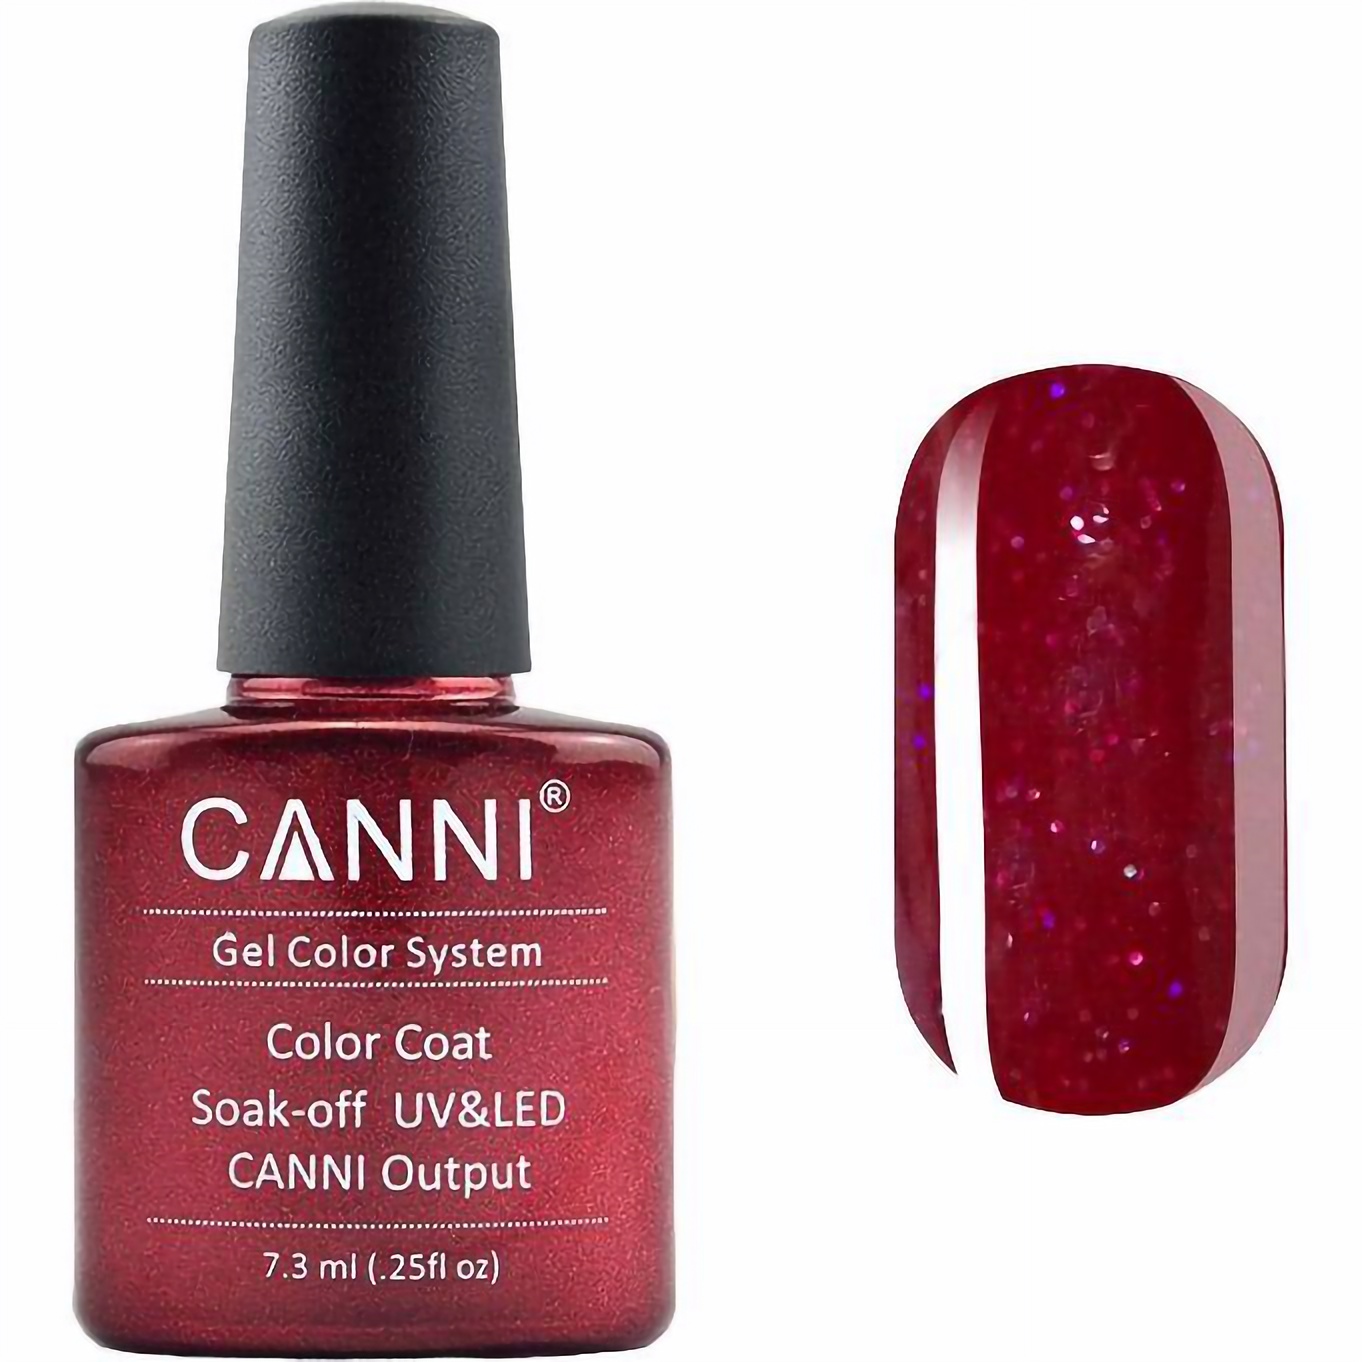 Гель-лак Canni Color Coat Soak-off UV&LED 129 бордовый с мелкими блестками 7.3 мл - фото 1